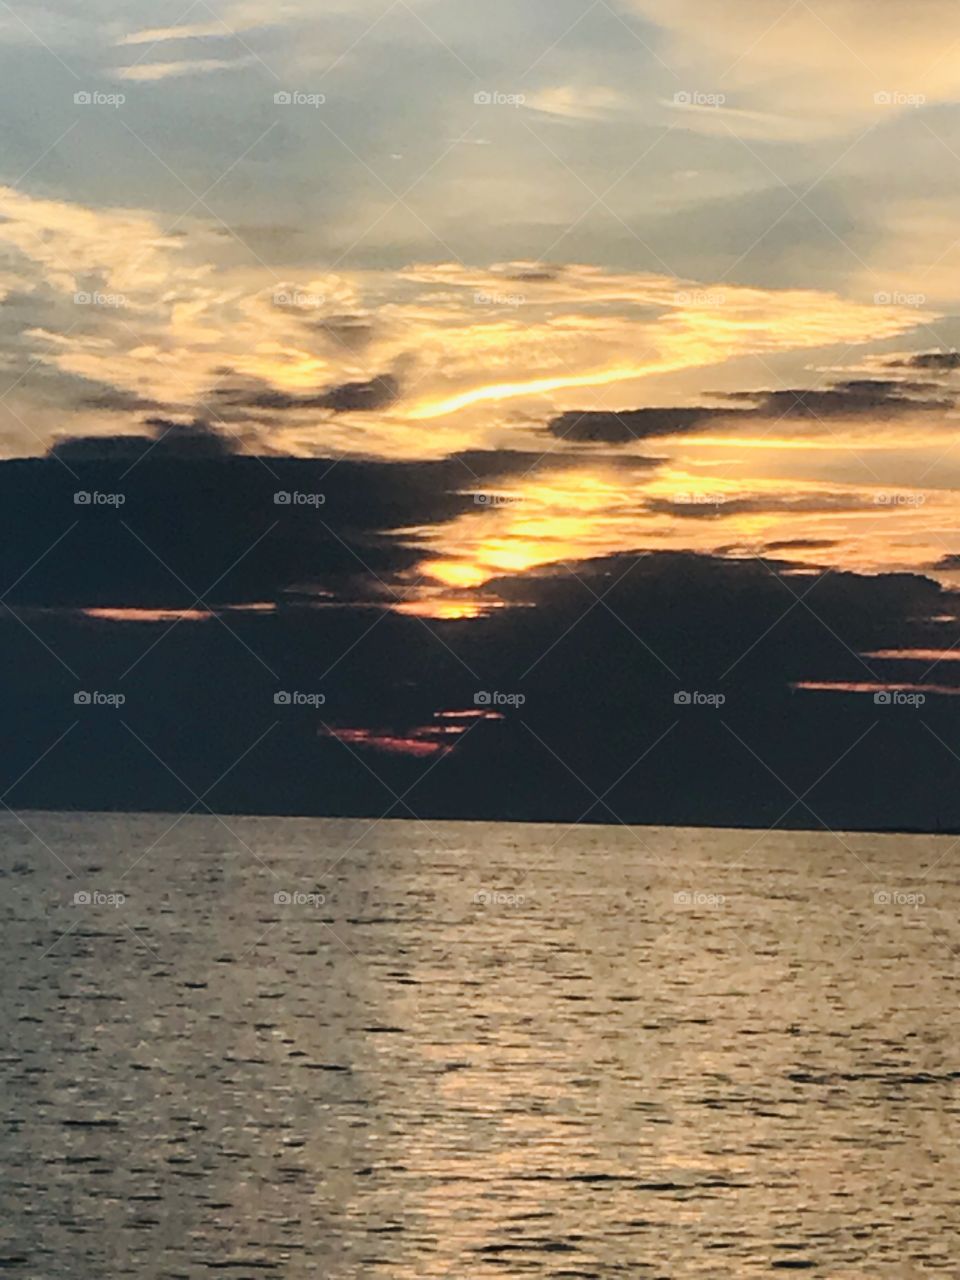 Evening crystal coast NC sunset 